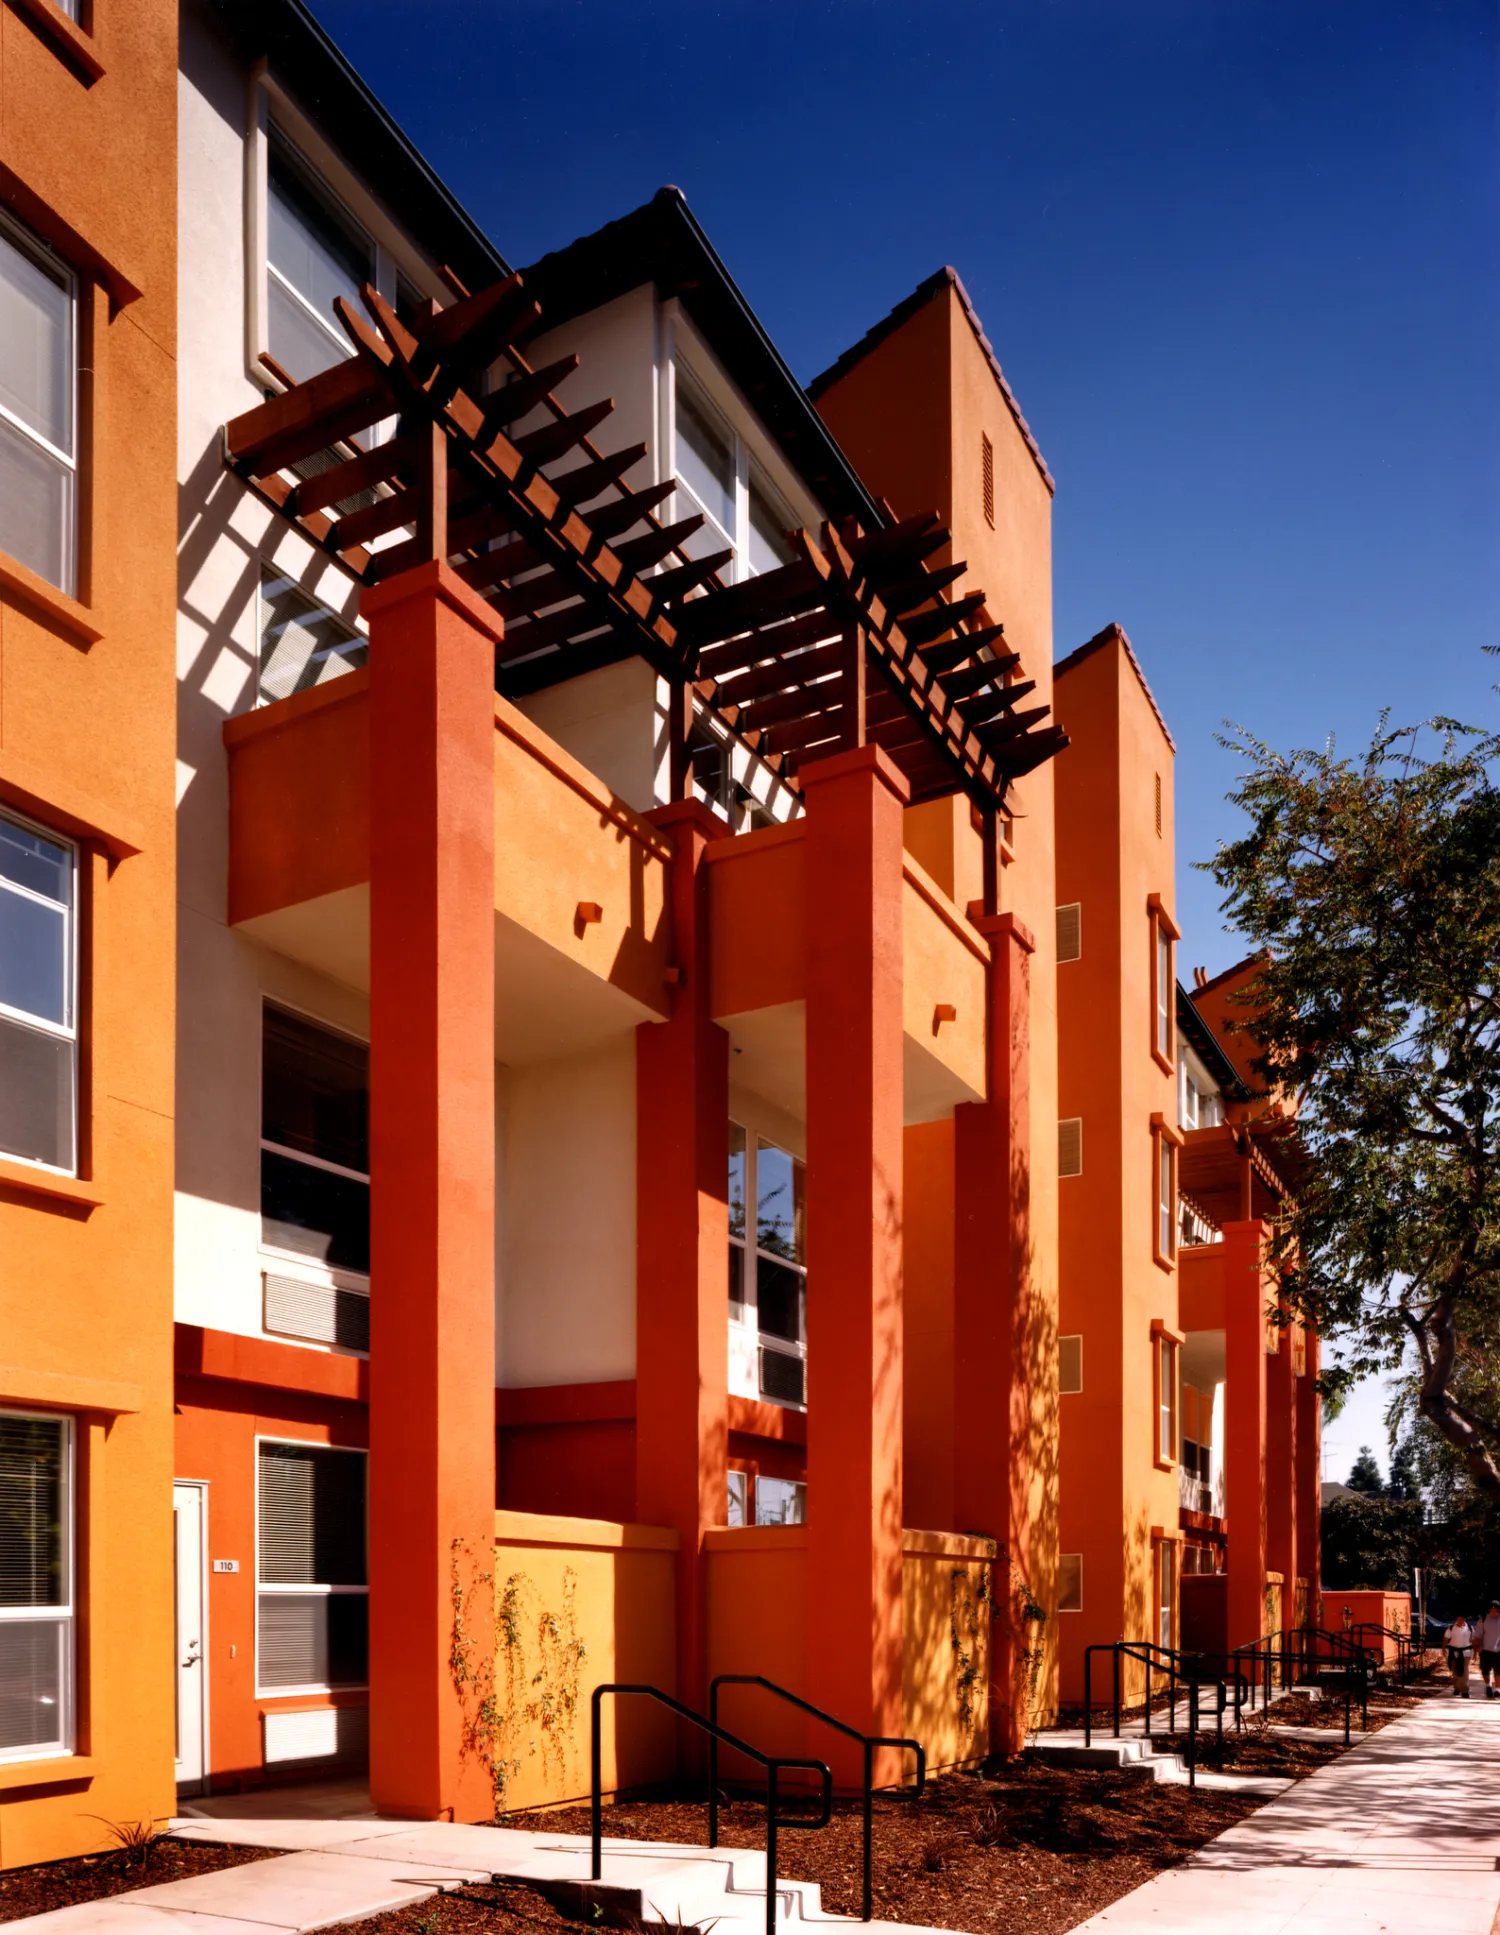 Sidewalk view of ground-level units at Plaza Maria in San Jose, California.